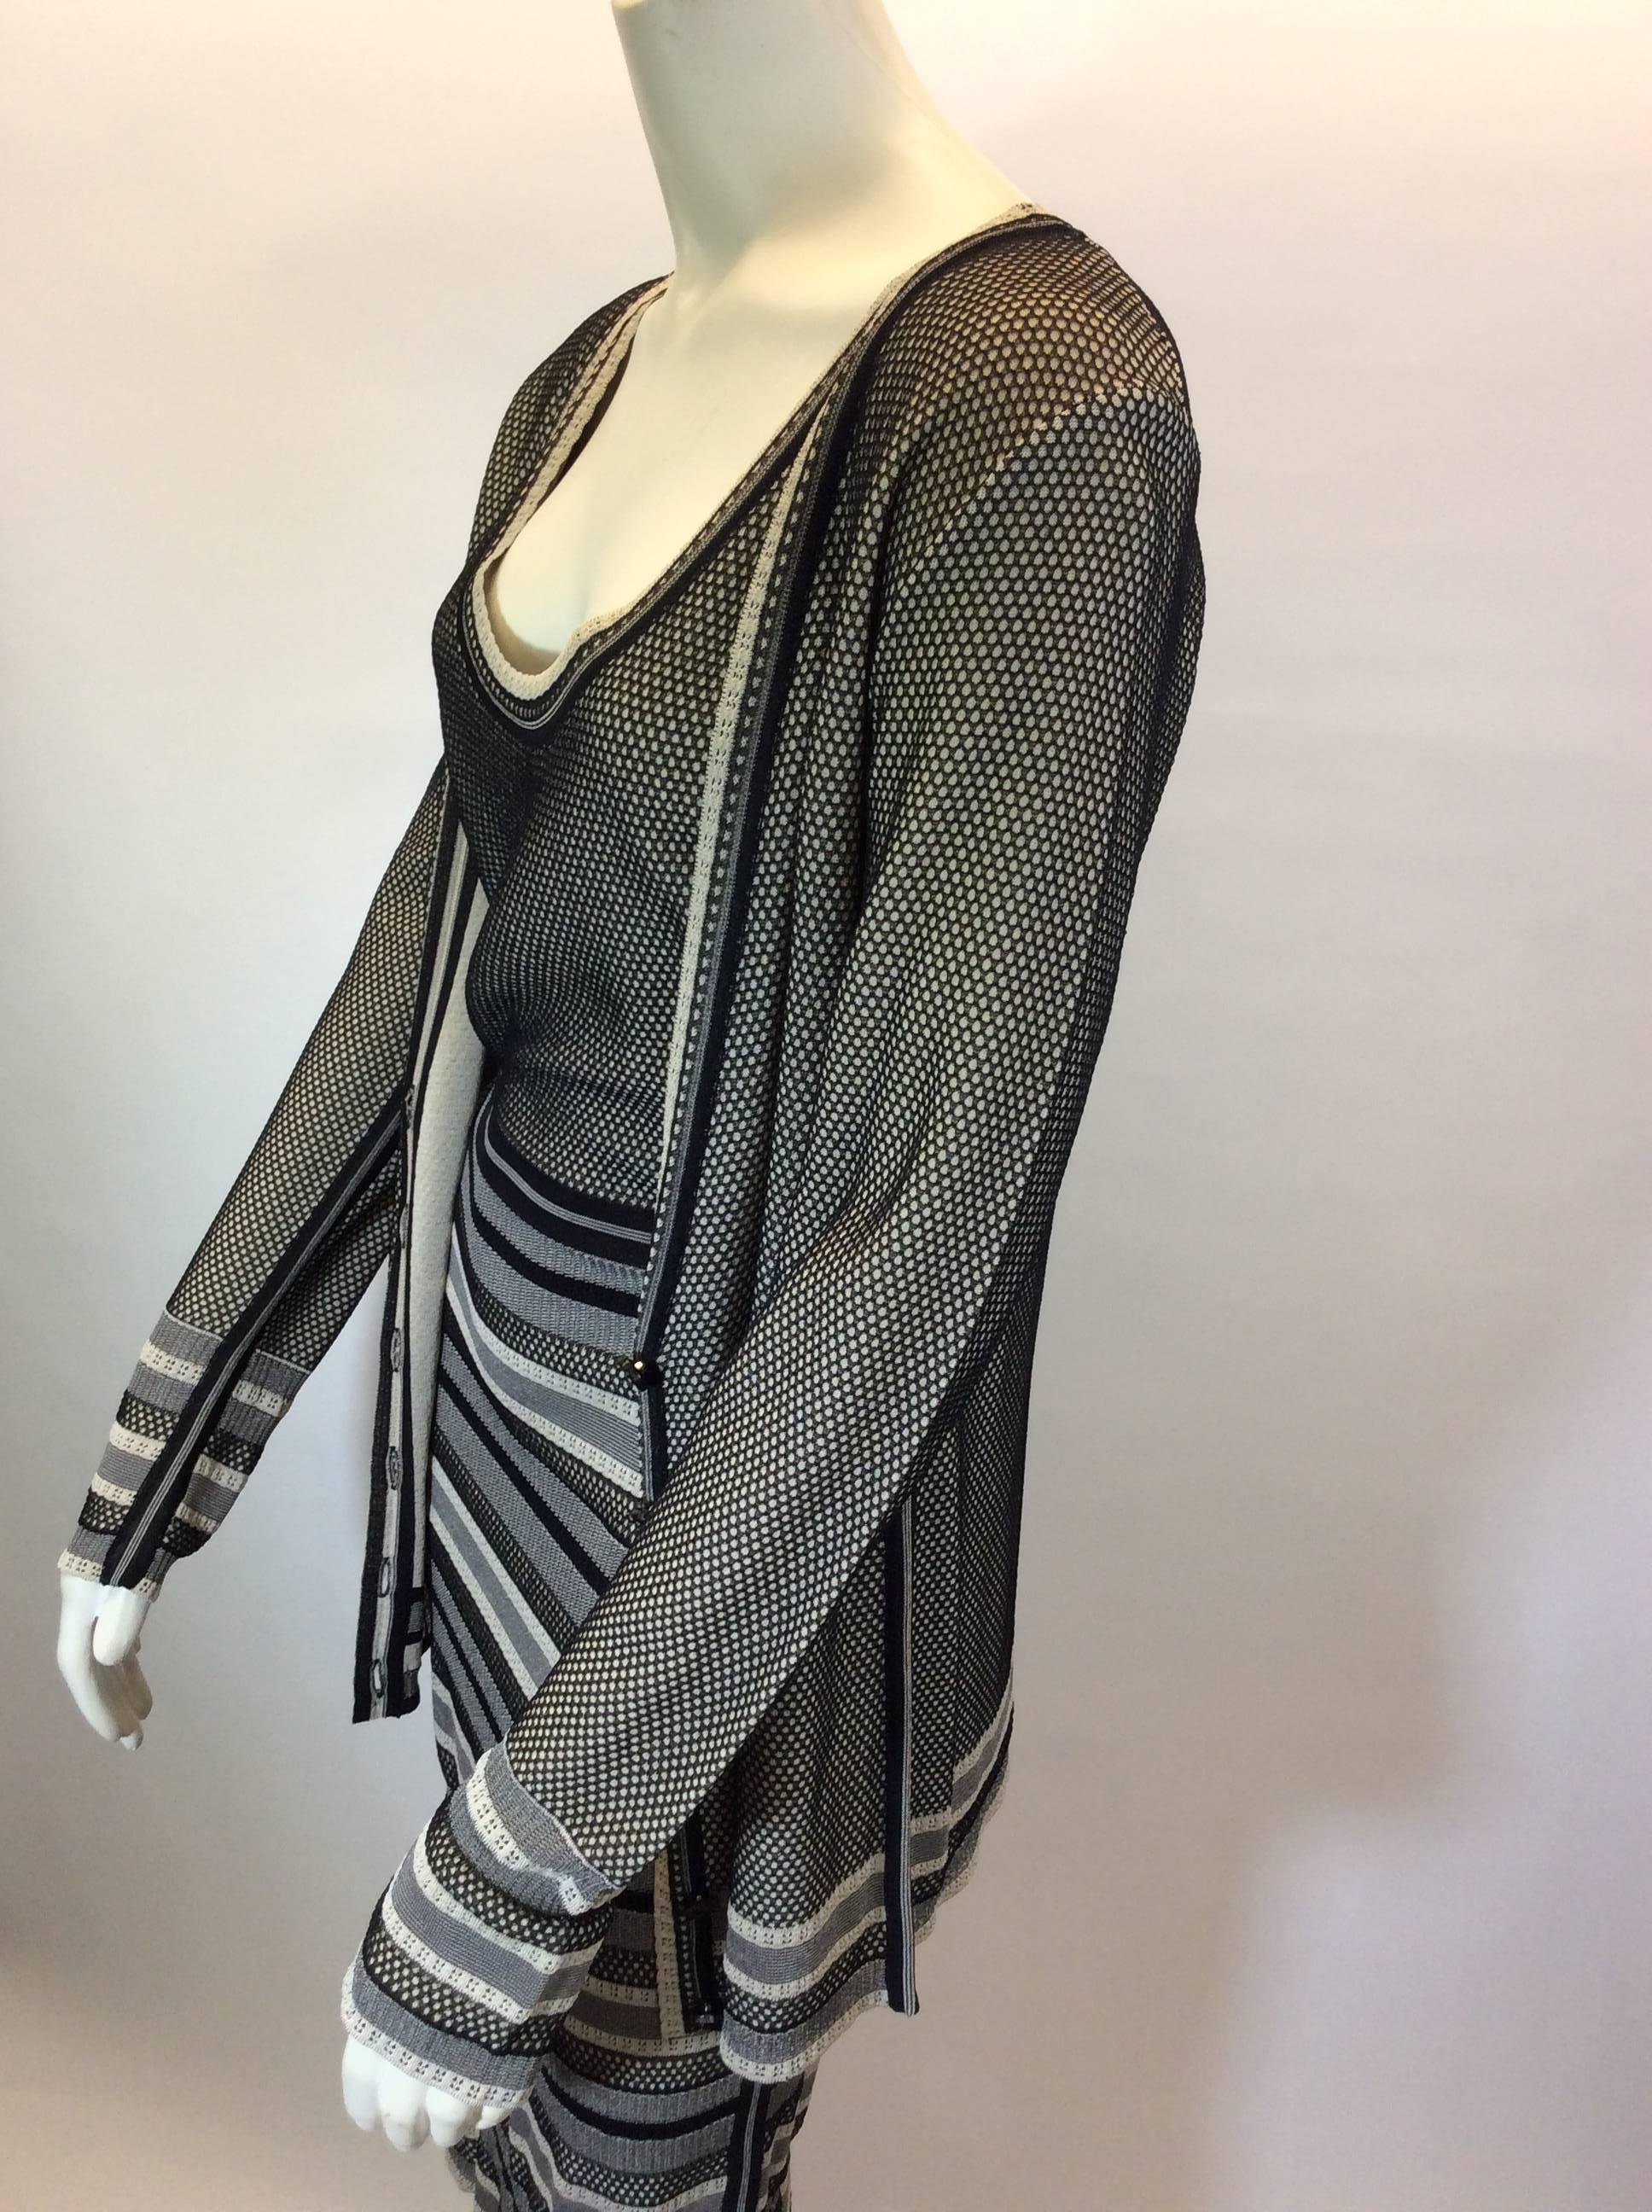 Striped Knit Dress and Cardigan Set
Black and tan striped knit design
Cardigan features center front button closures
Sleeveless knit dress
Size Medium
76% Viscose, 24% Polyamide